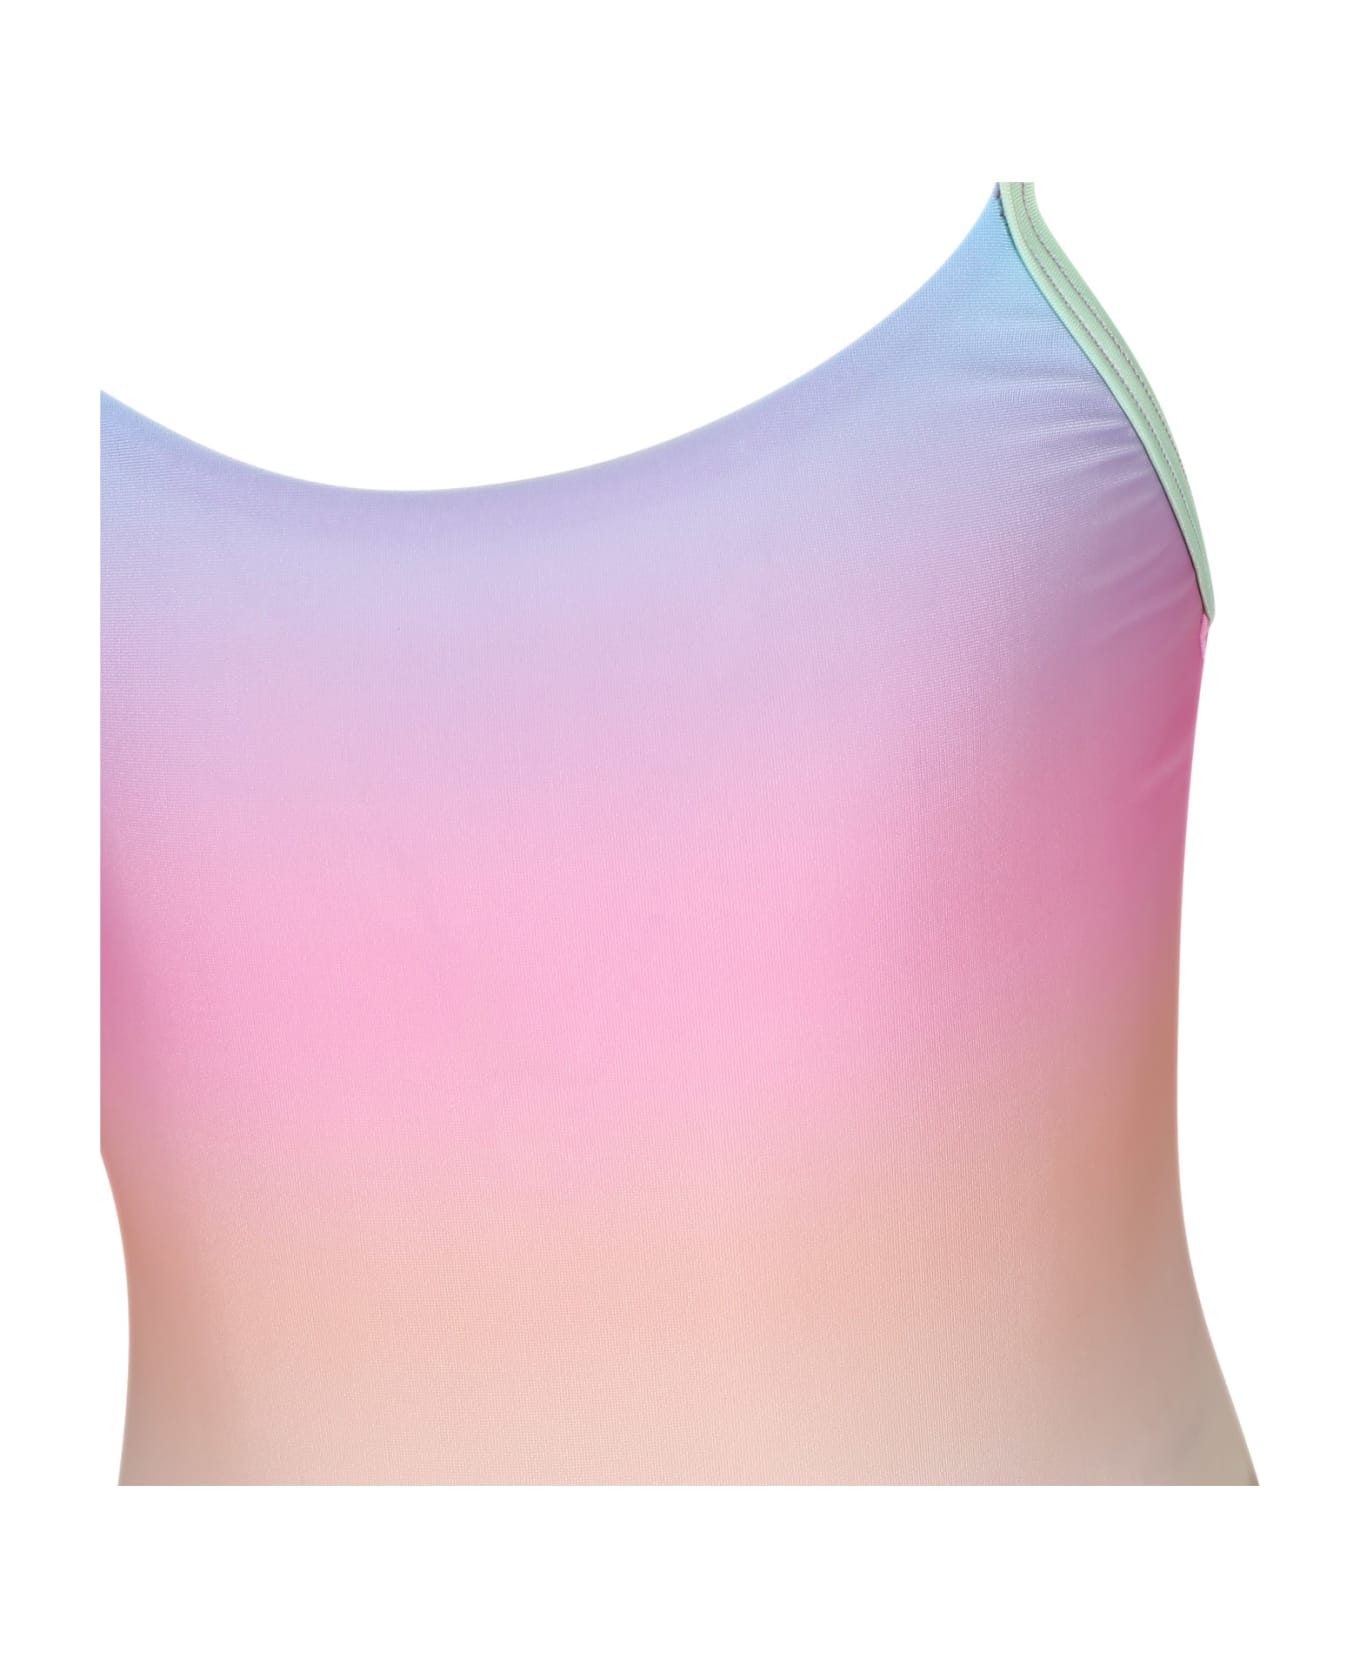 Molo Multicolor Swimsuit For Girl With Print - Multicolor